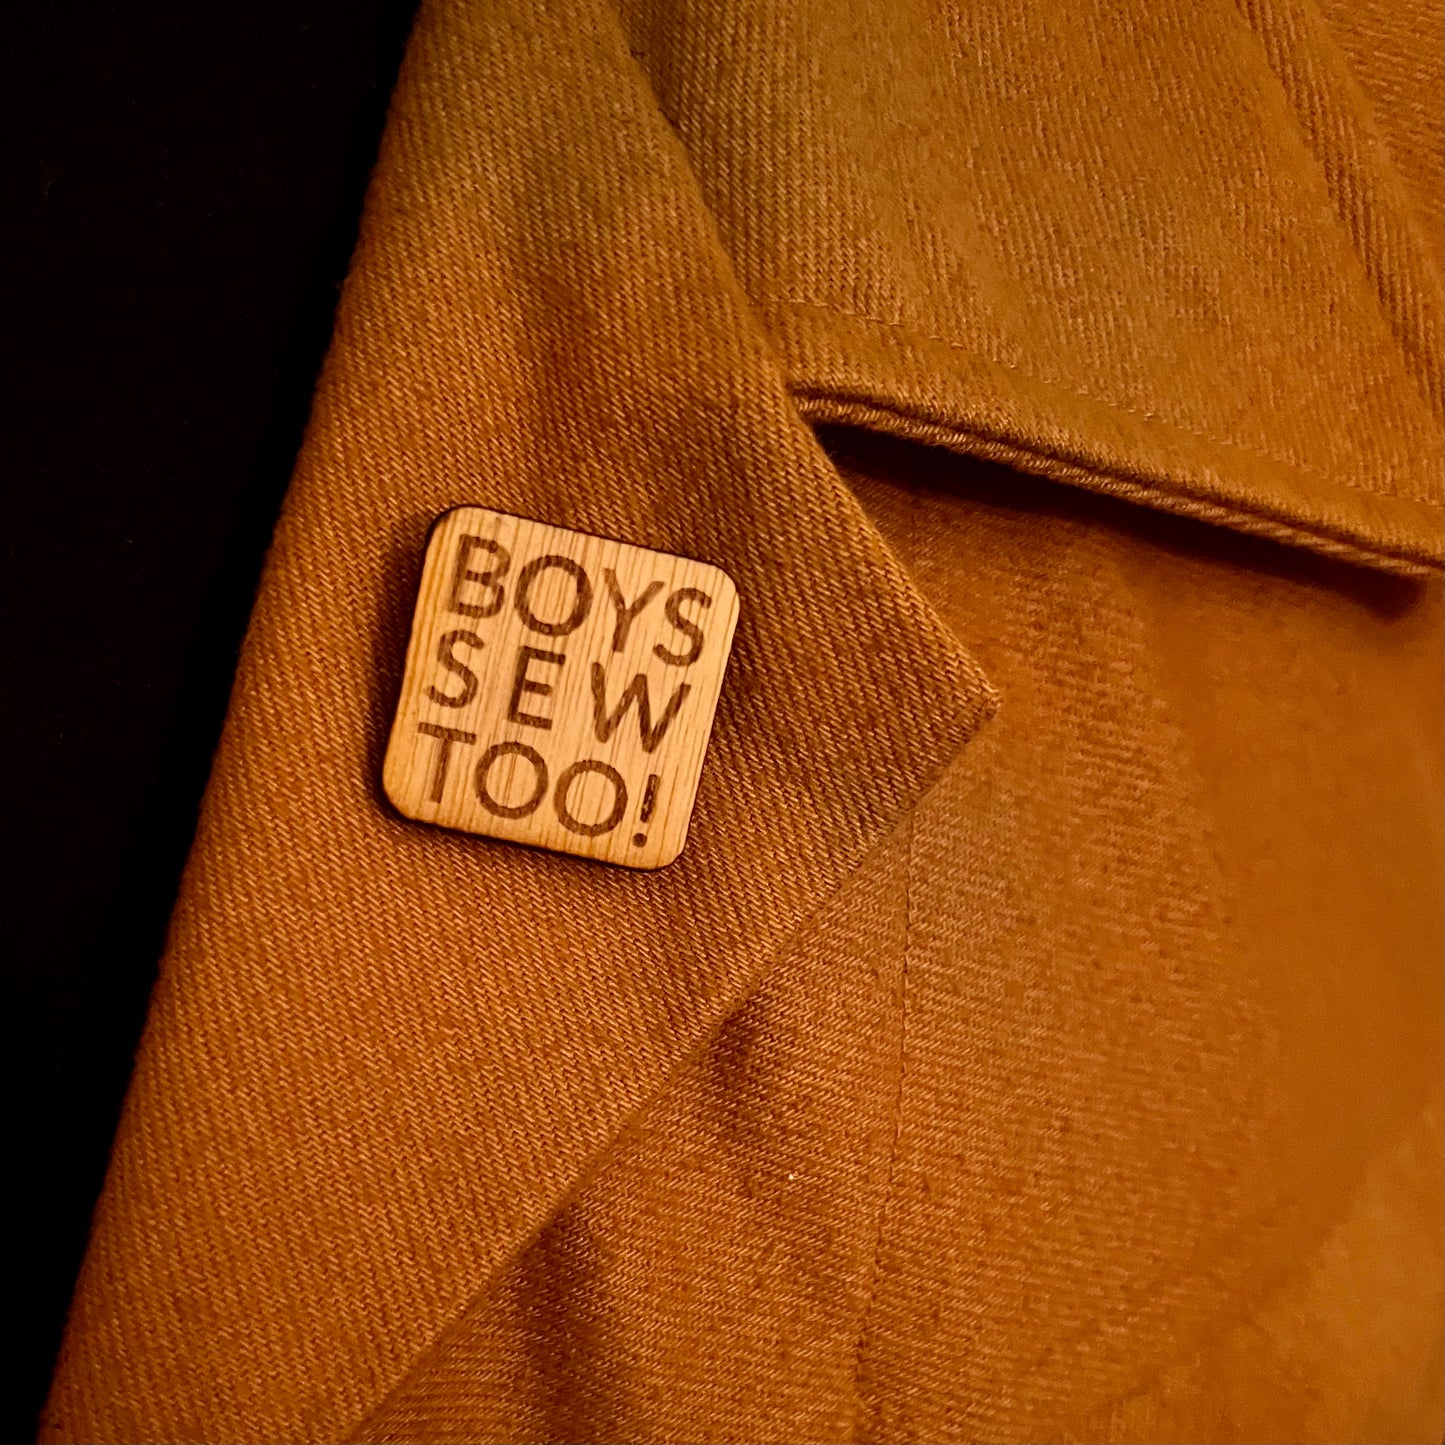 Boys Sew Too! Pin Badge